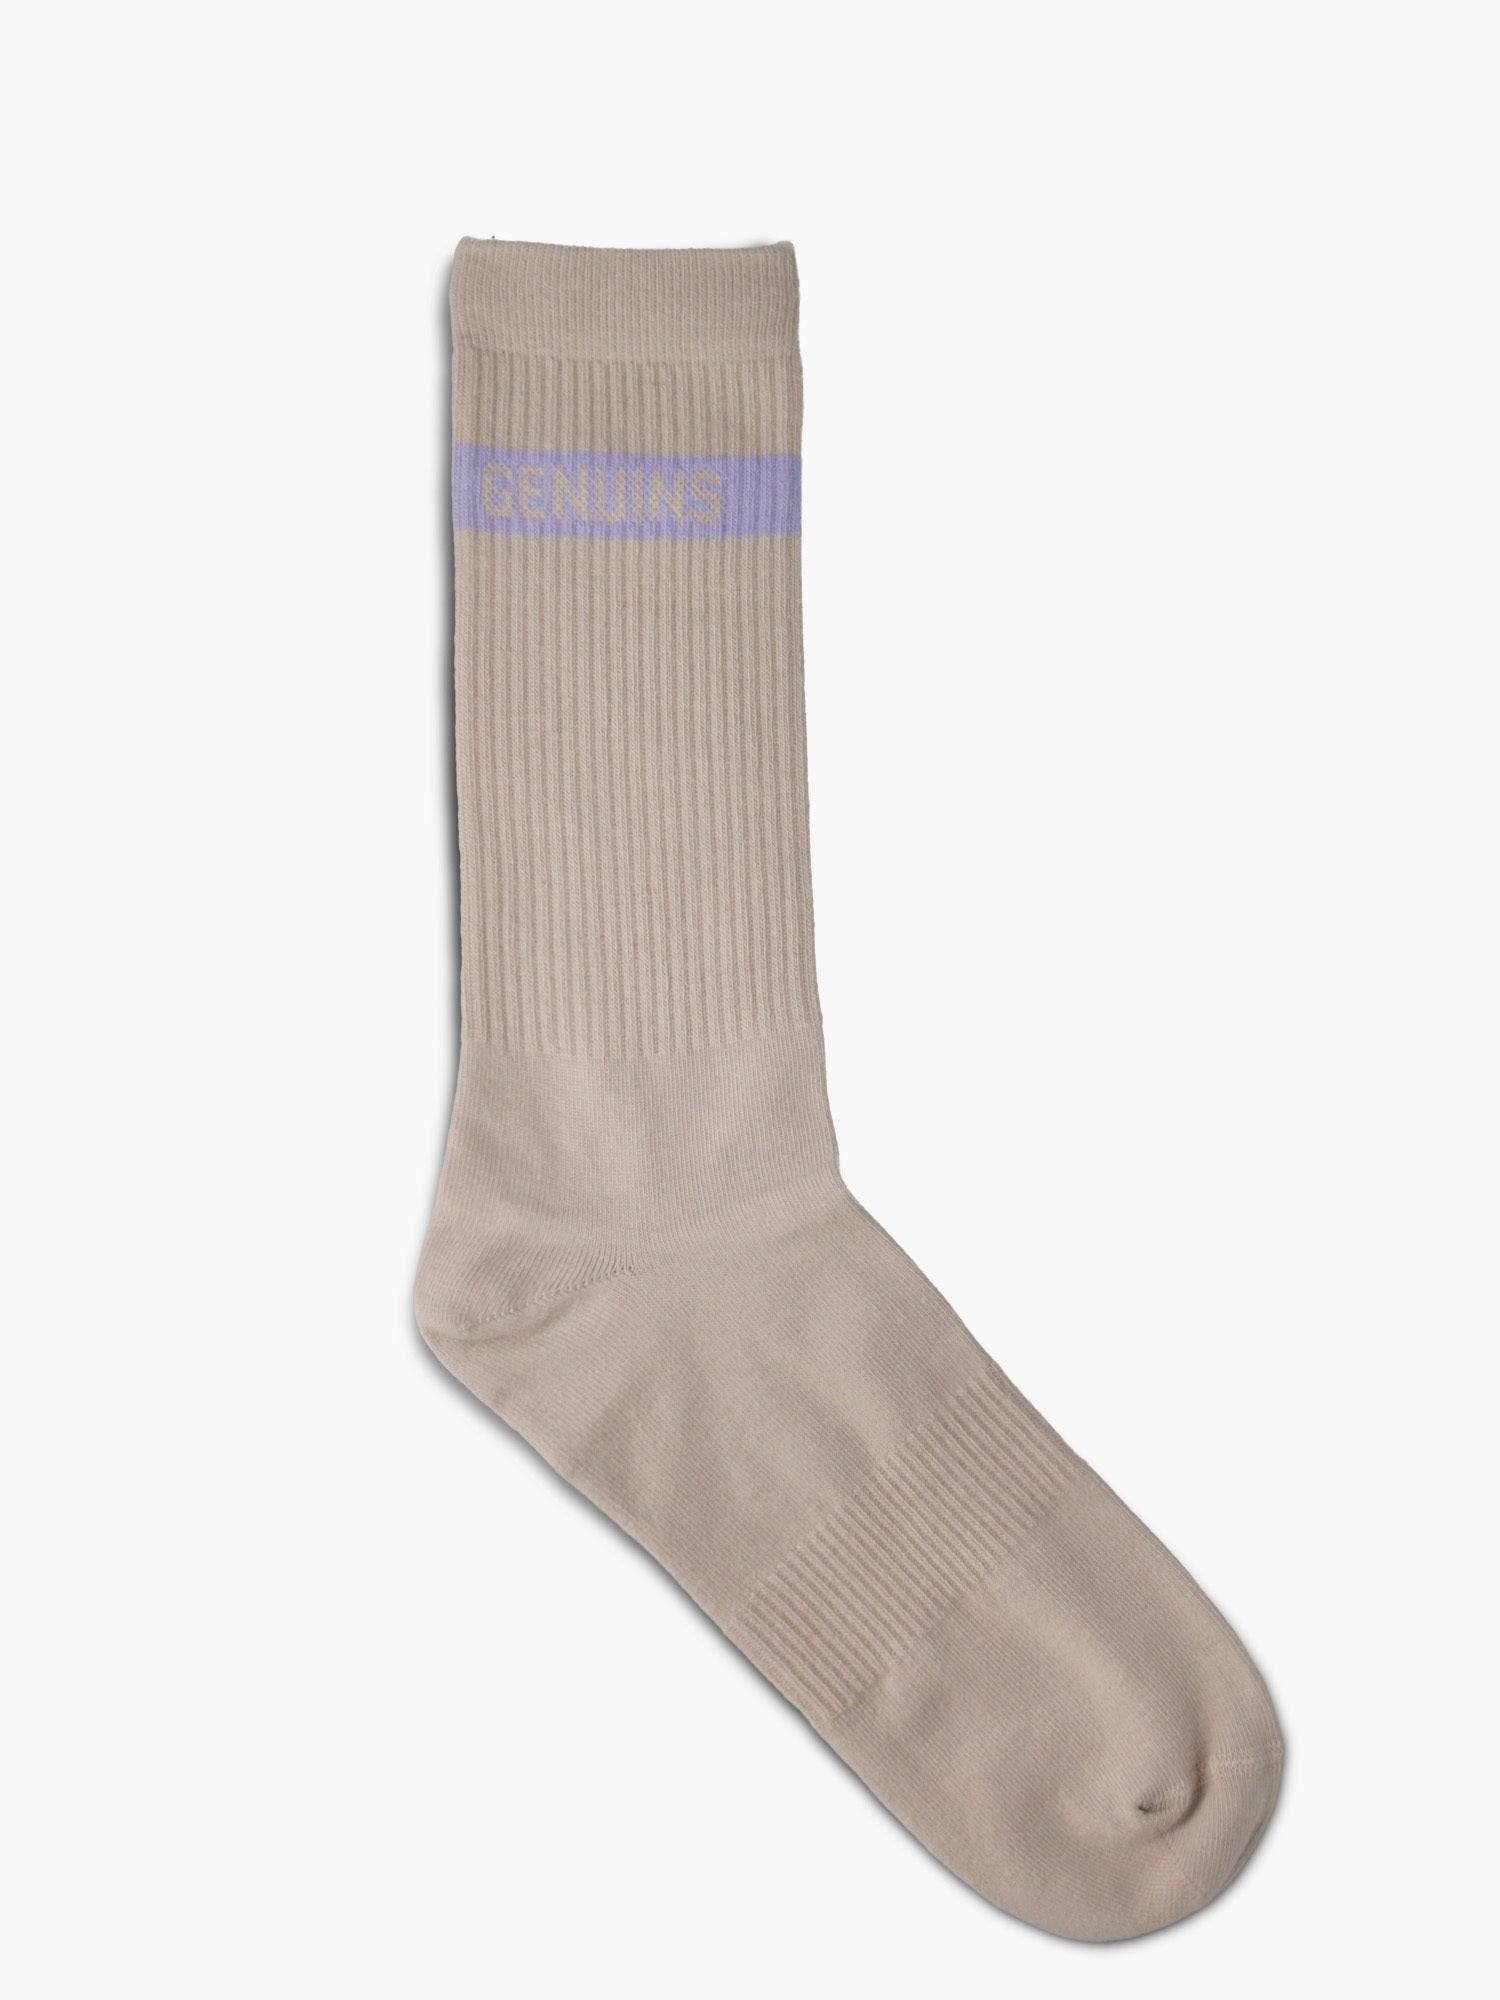 Genuins Socks Lavender Unisex